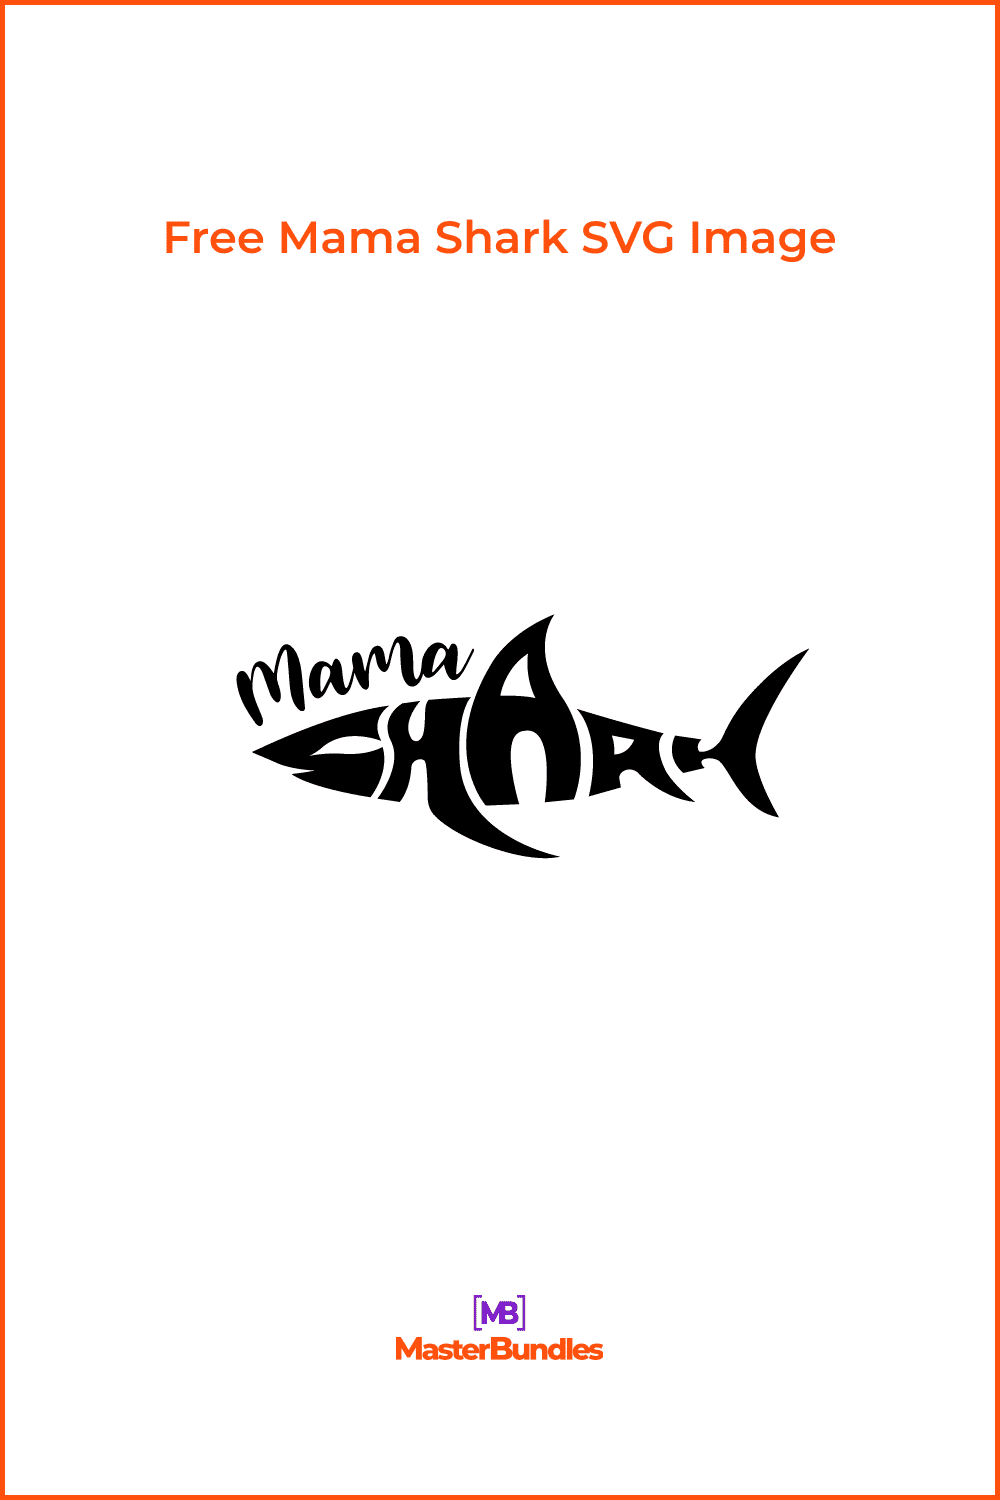 Free Mama Shark SVG Image.